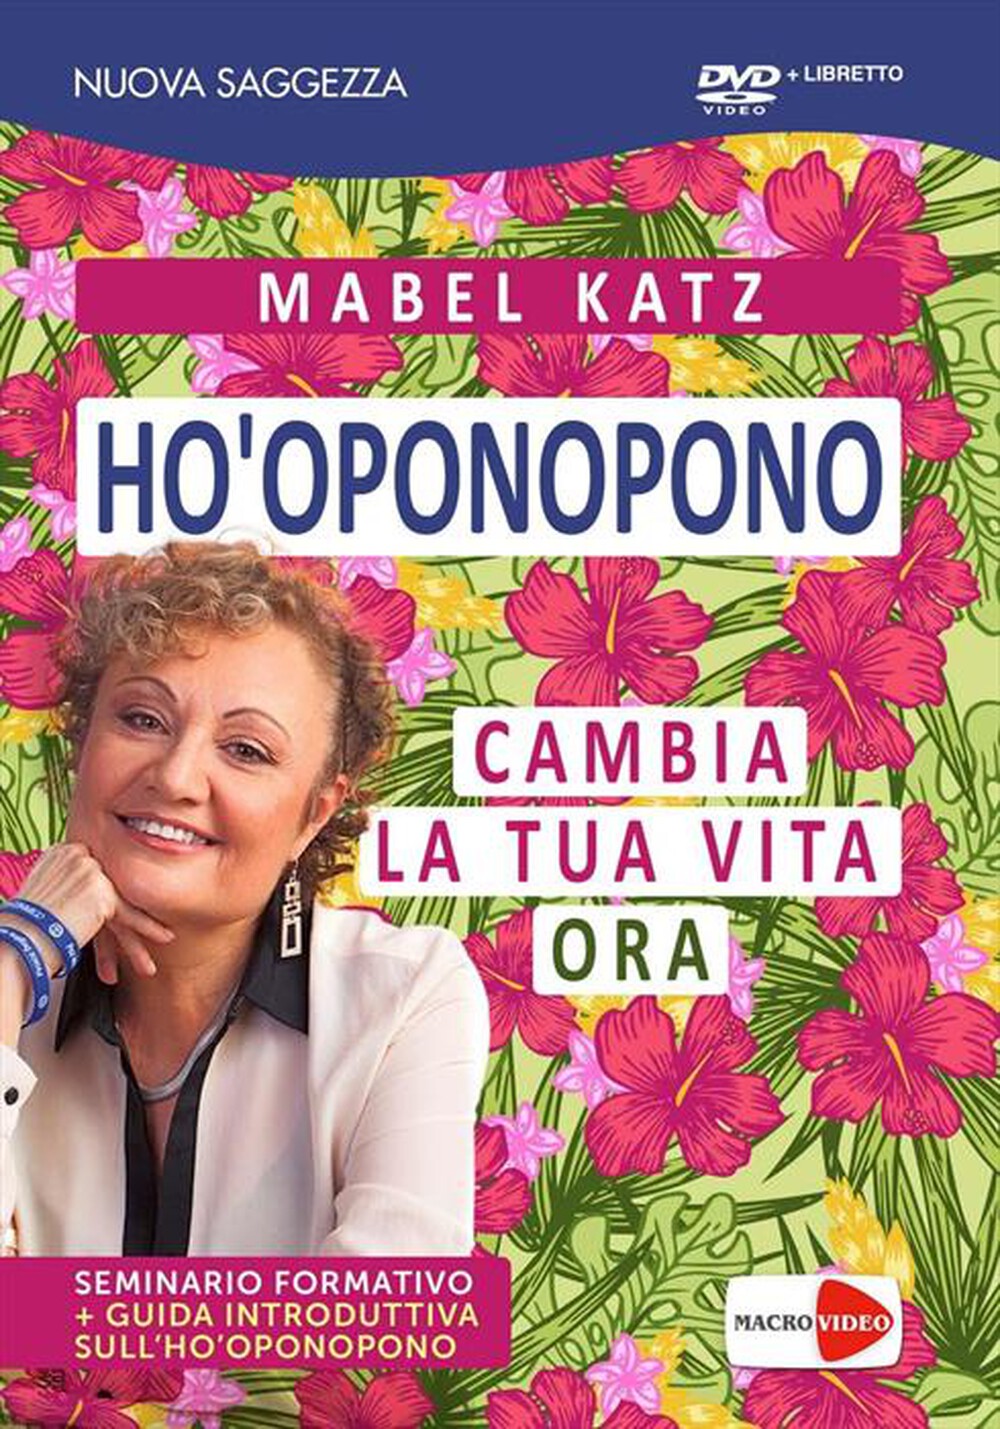 "MACRO VIDEO - Mabel Katz - Ho'Oponopono Cambia La Tua Vita Ora"